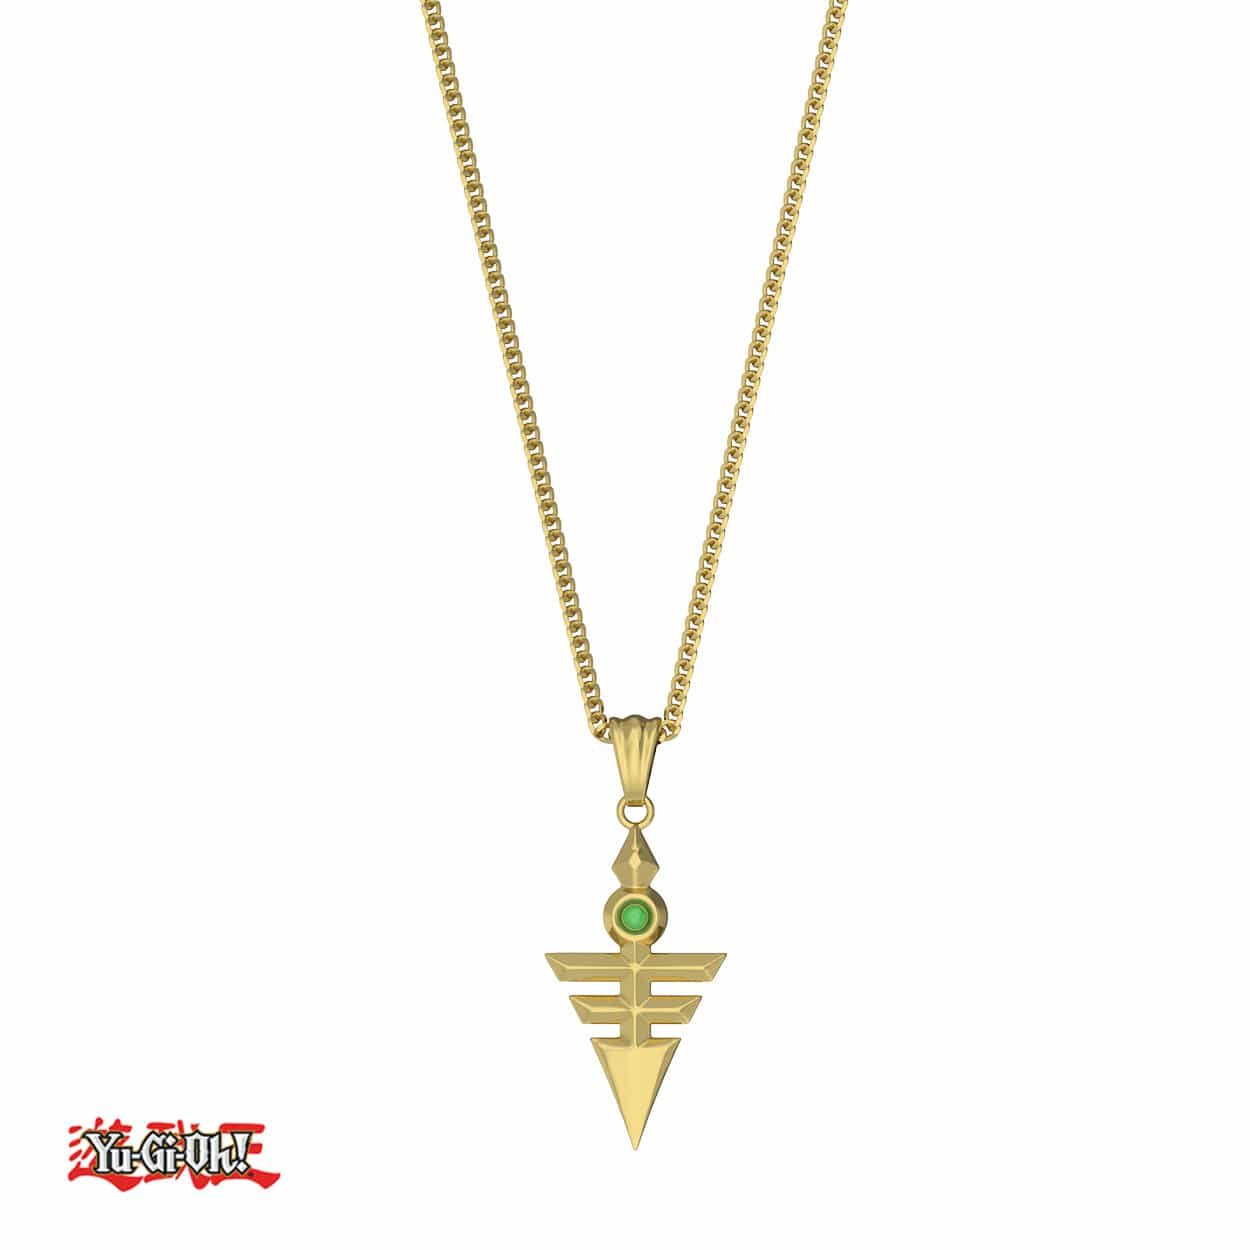 Yu-Gi-Oh!™ Emperor's Key Necklace